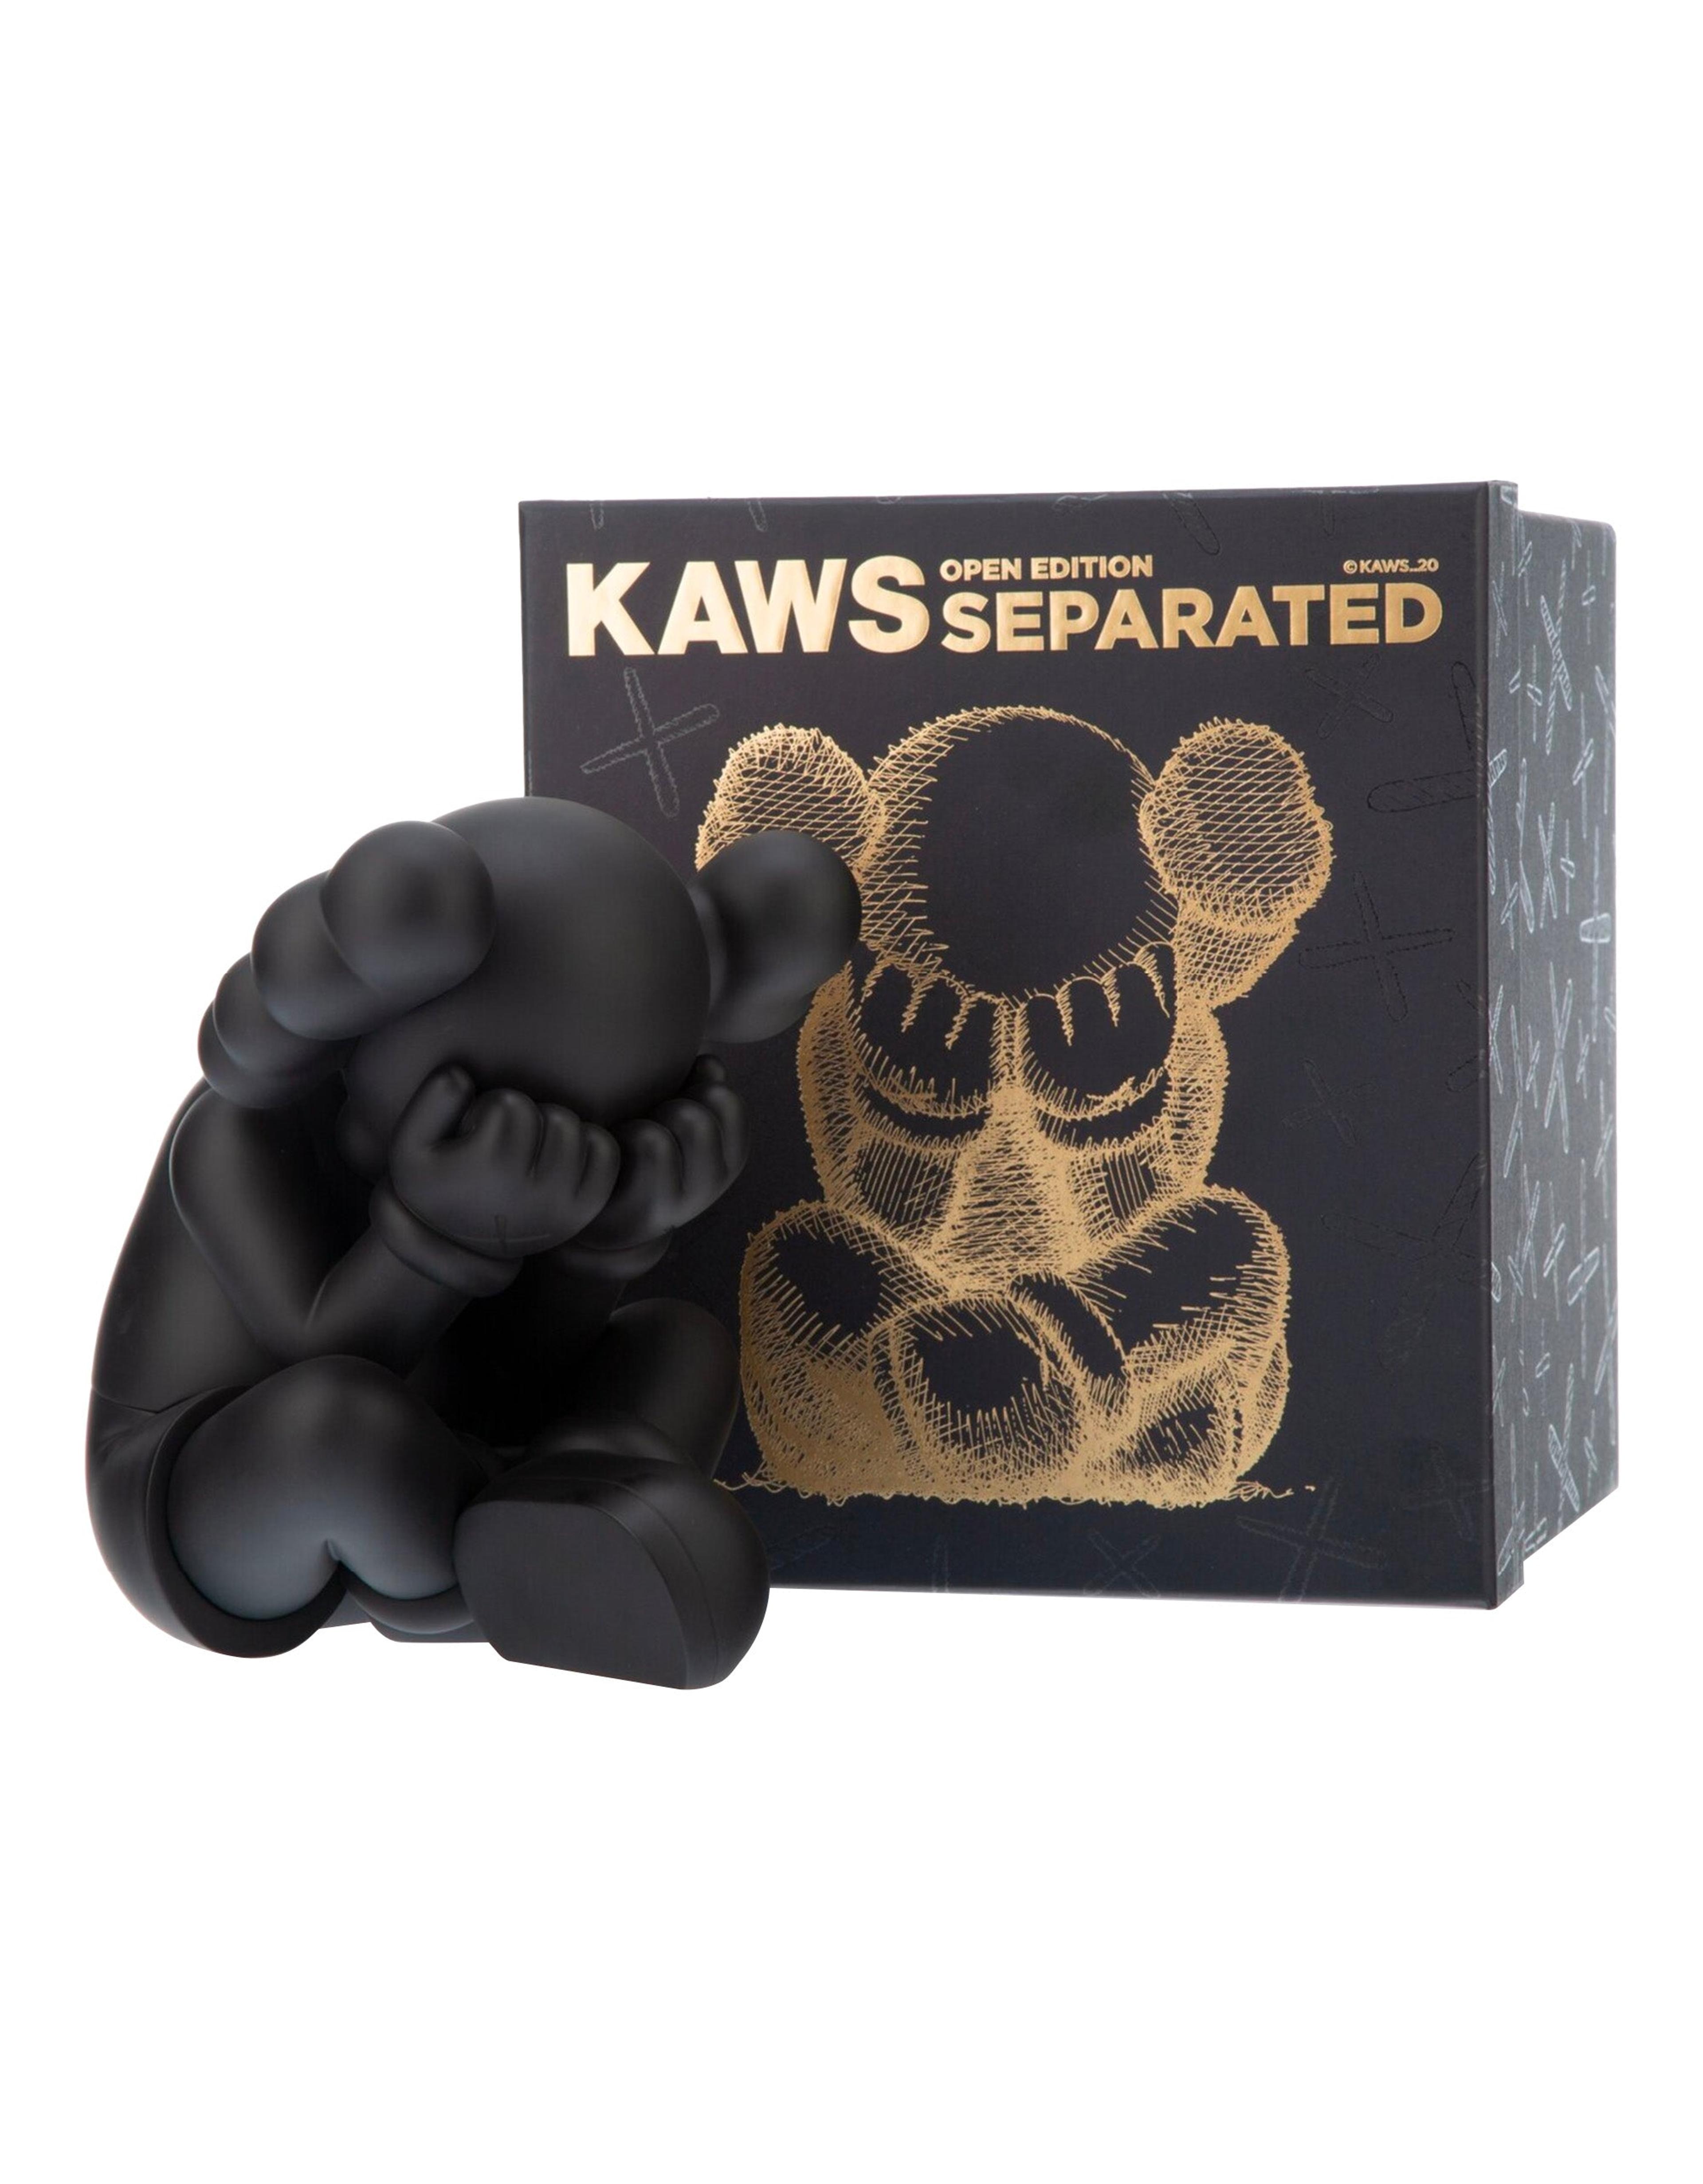 Alternate View 2 of KAWS - Separated Black, 2021